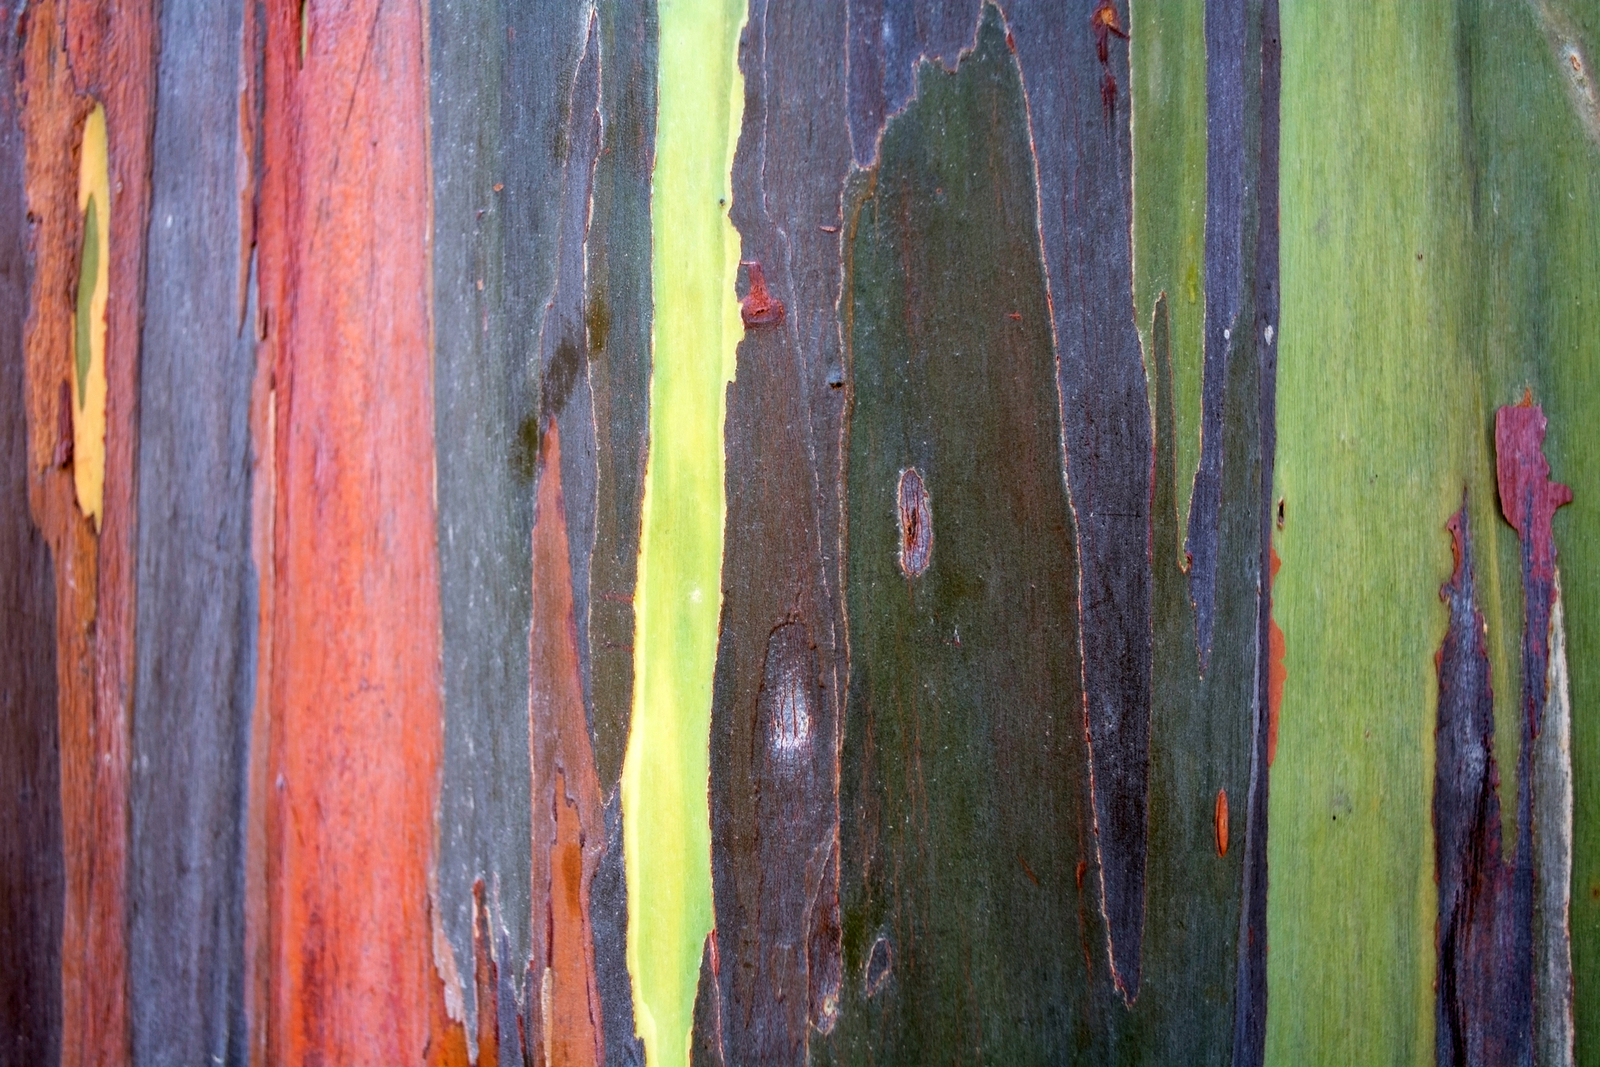 The colorful pattern of rainbow eucalyptus tree. Image Credit: © Lehakok | Dreamstime.com.